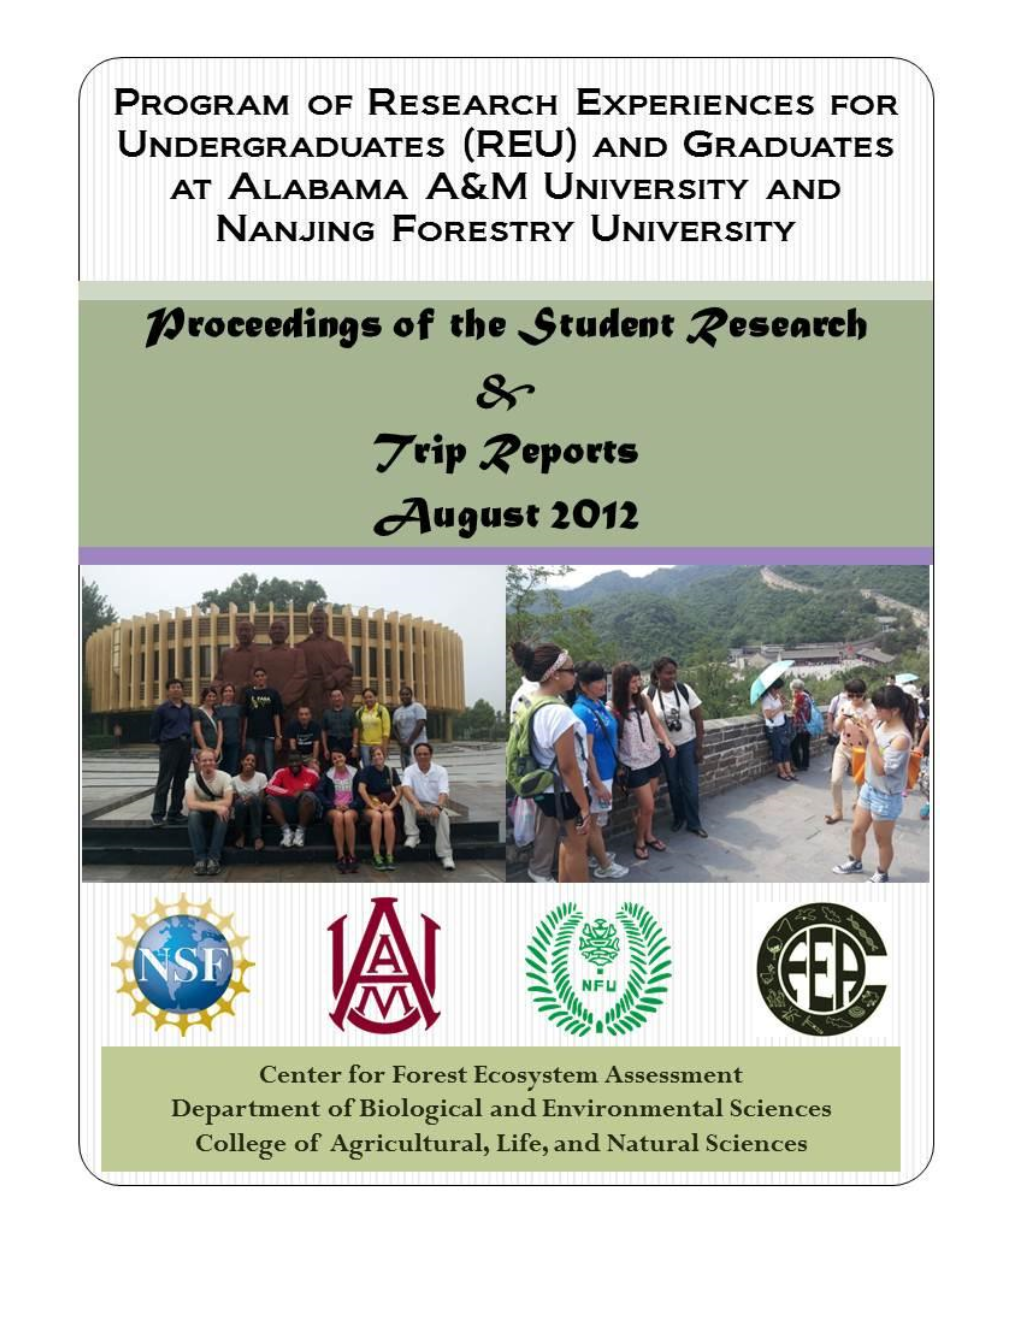 Read the 2012 Student Proceedings